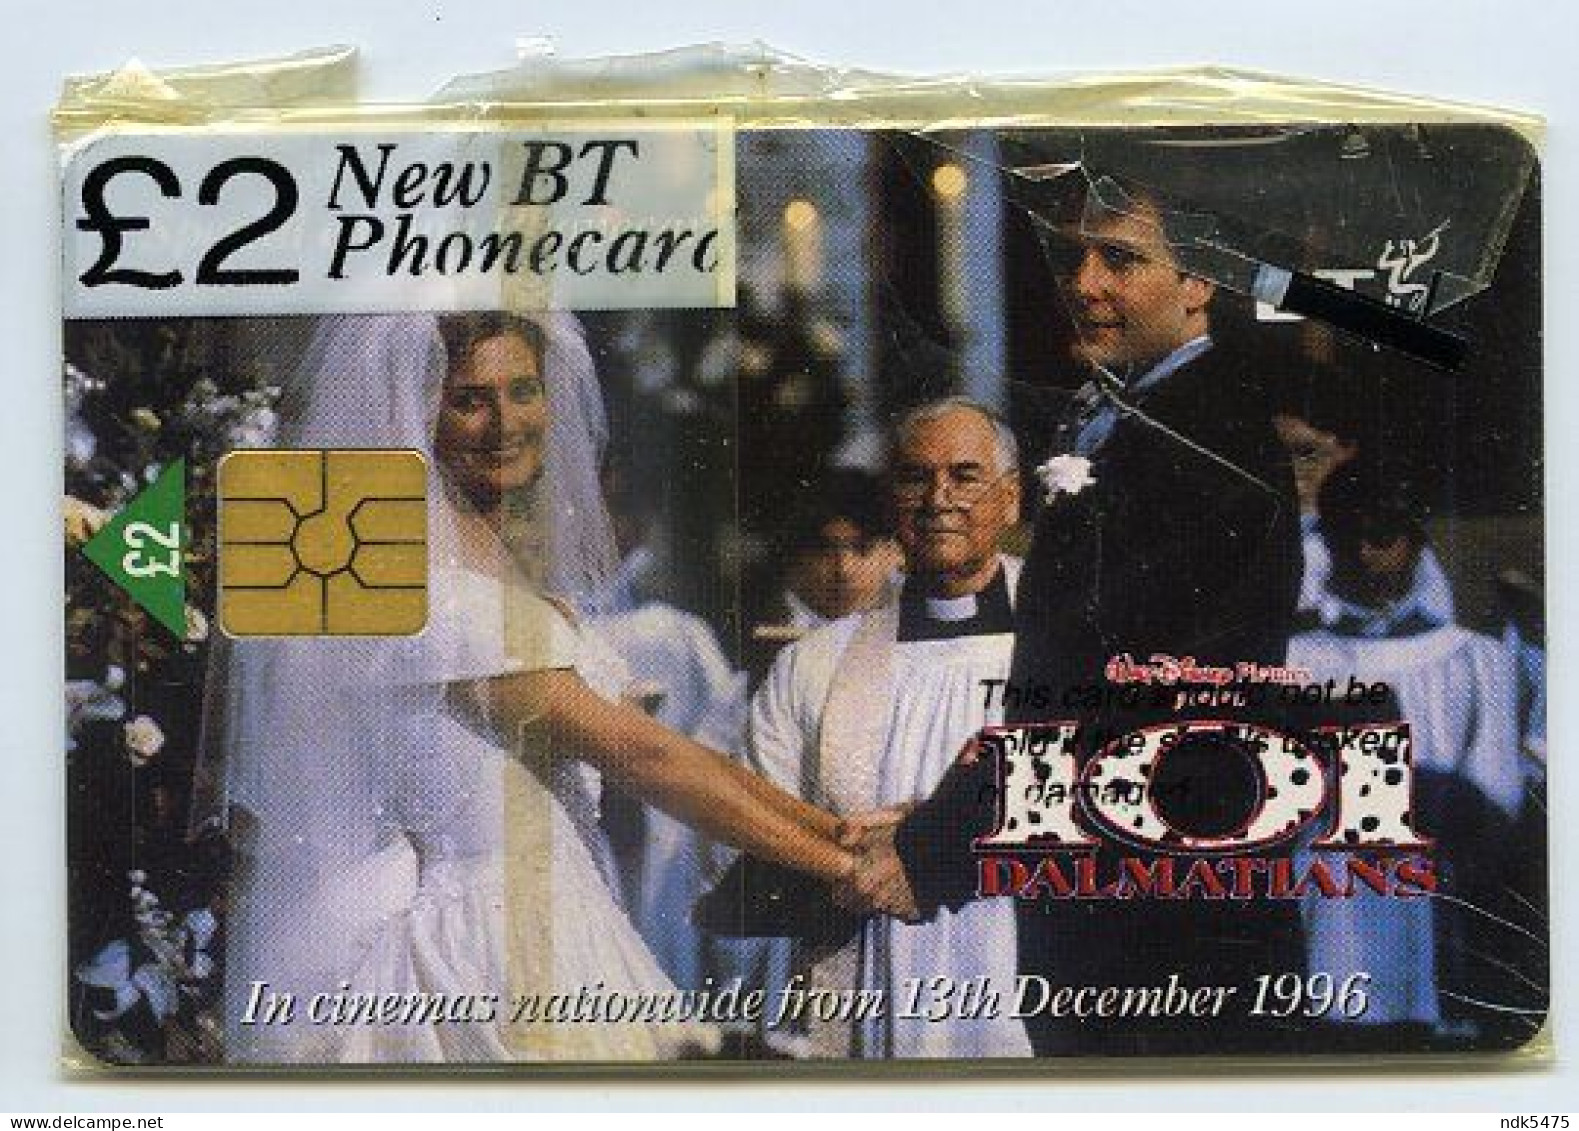 BT PHONECARD : 101 DALMATIONS - 1996 FILM : £2 / JOELY RICHARDSON, JEFF DANIELS - BT Promotional